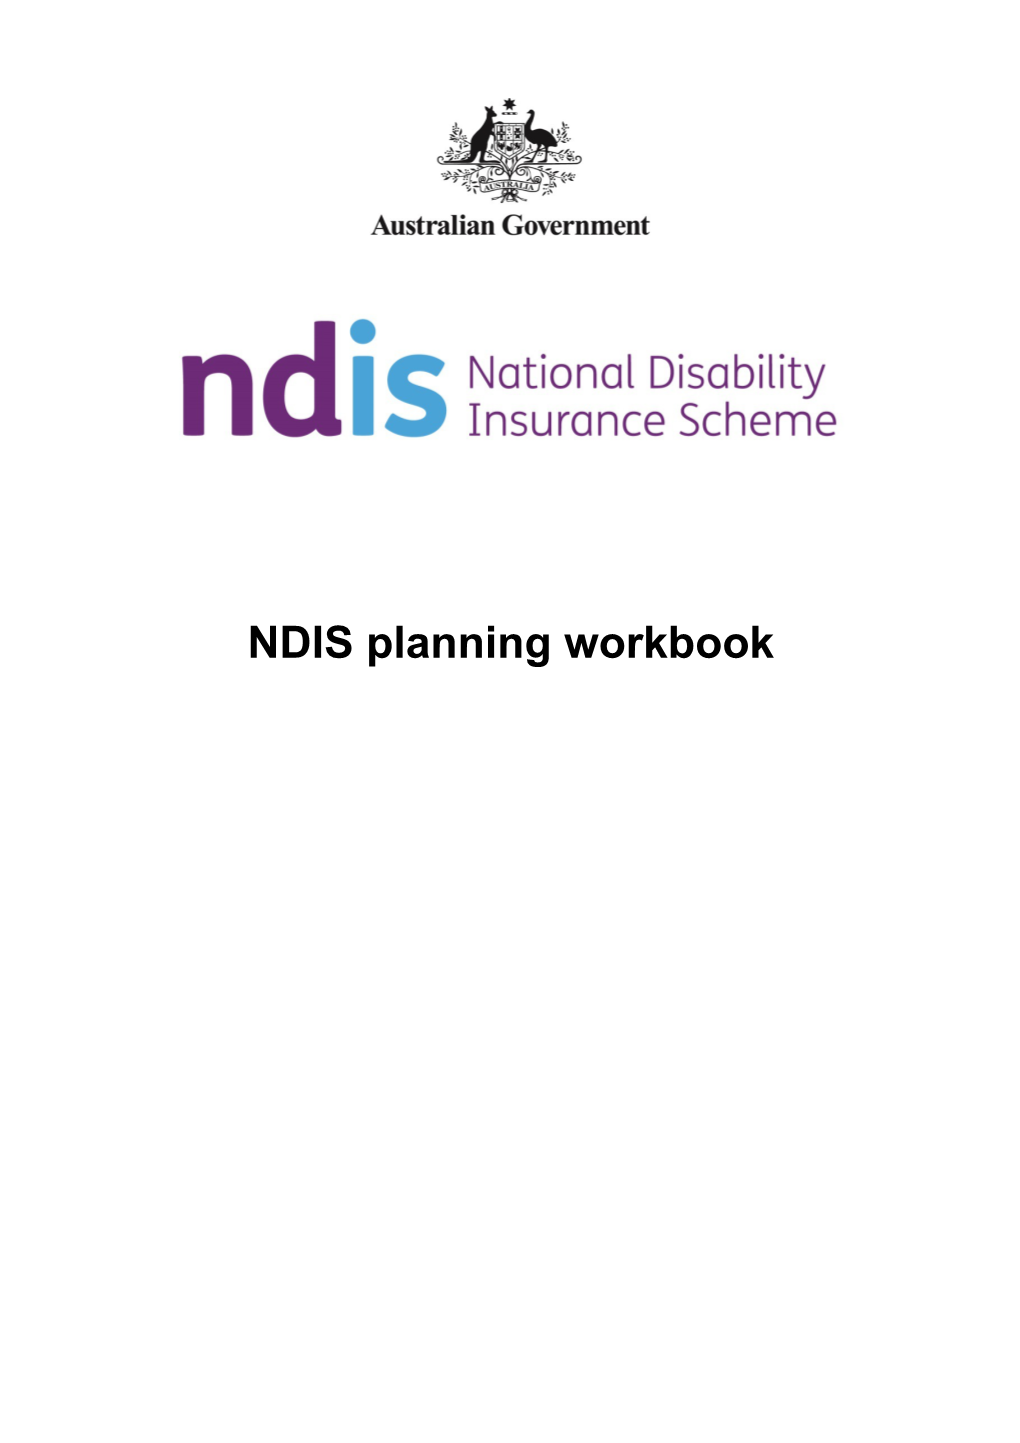 NDIS Planning Workbook